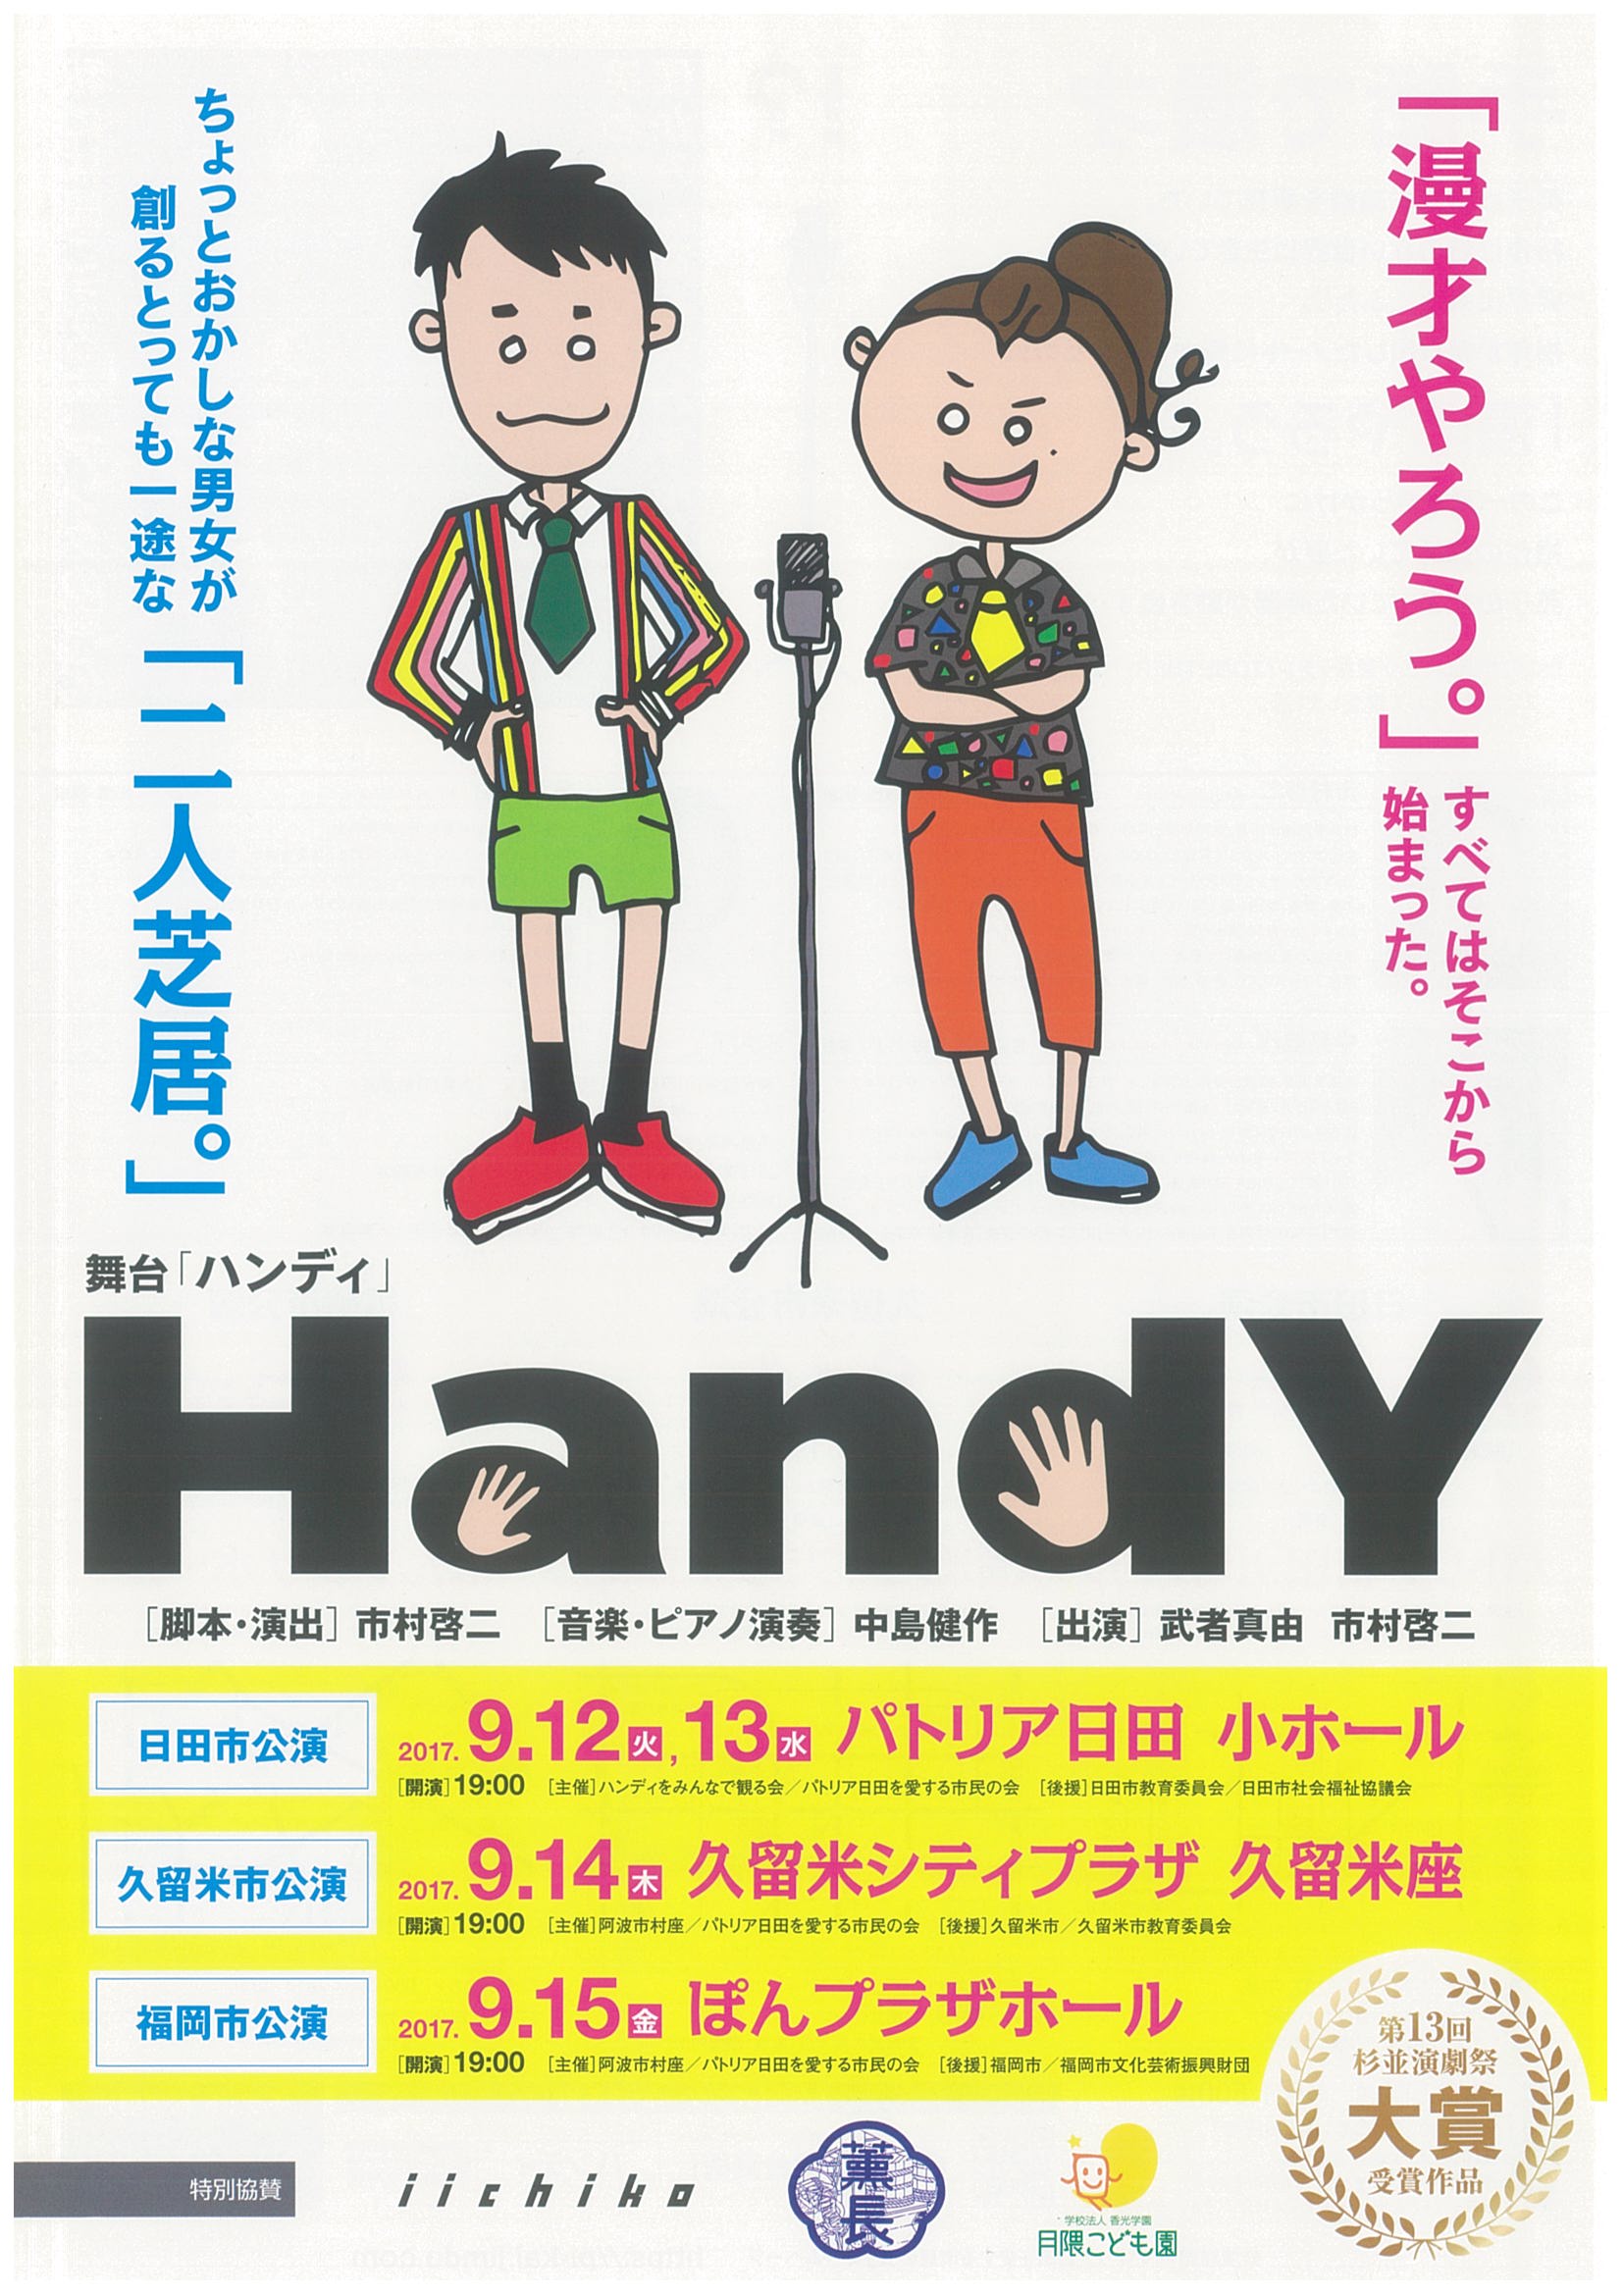 THE handy ザ ハンディ | nate-hospital.com